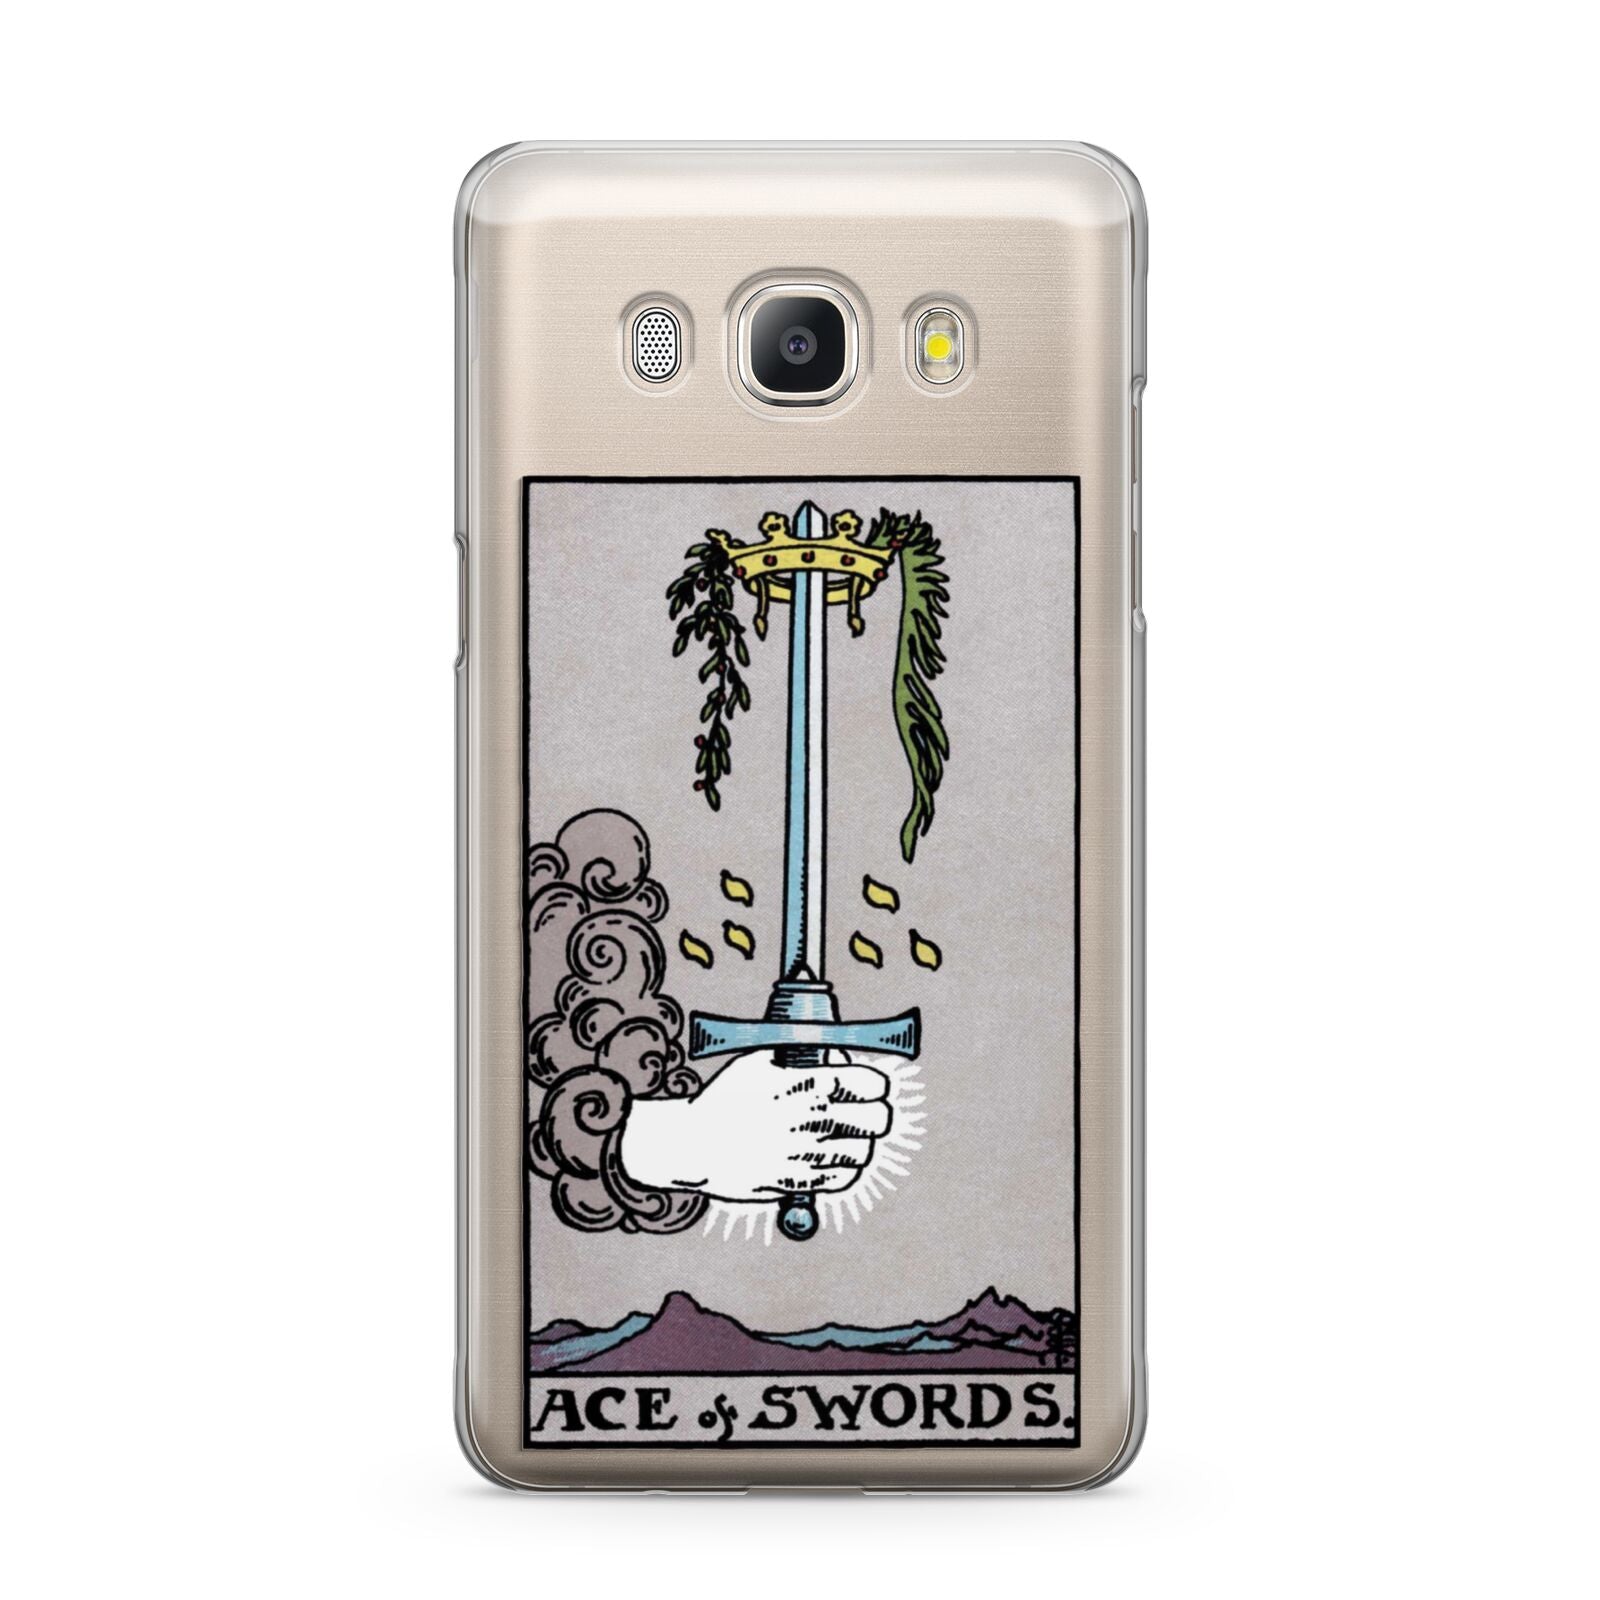 Ace of Swords Tarot Card Samsung Galaxy J5 2016 Case